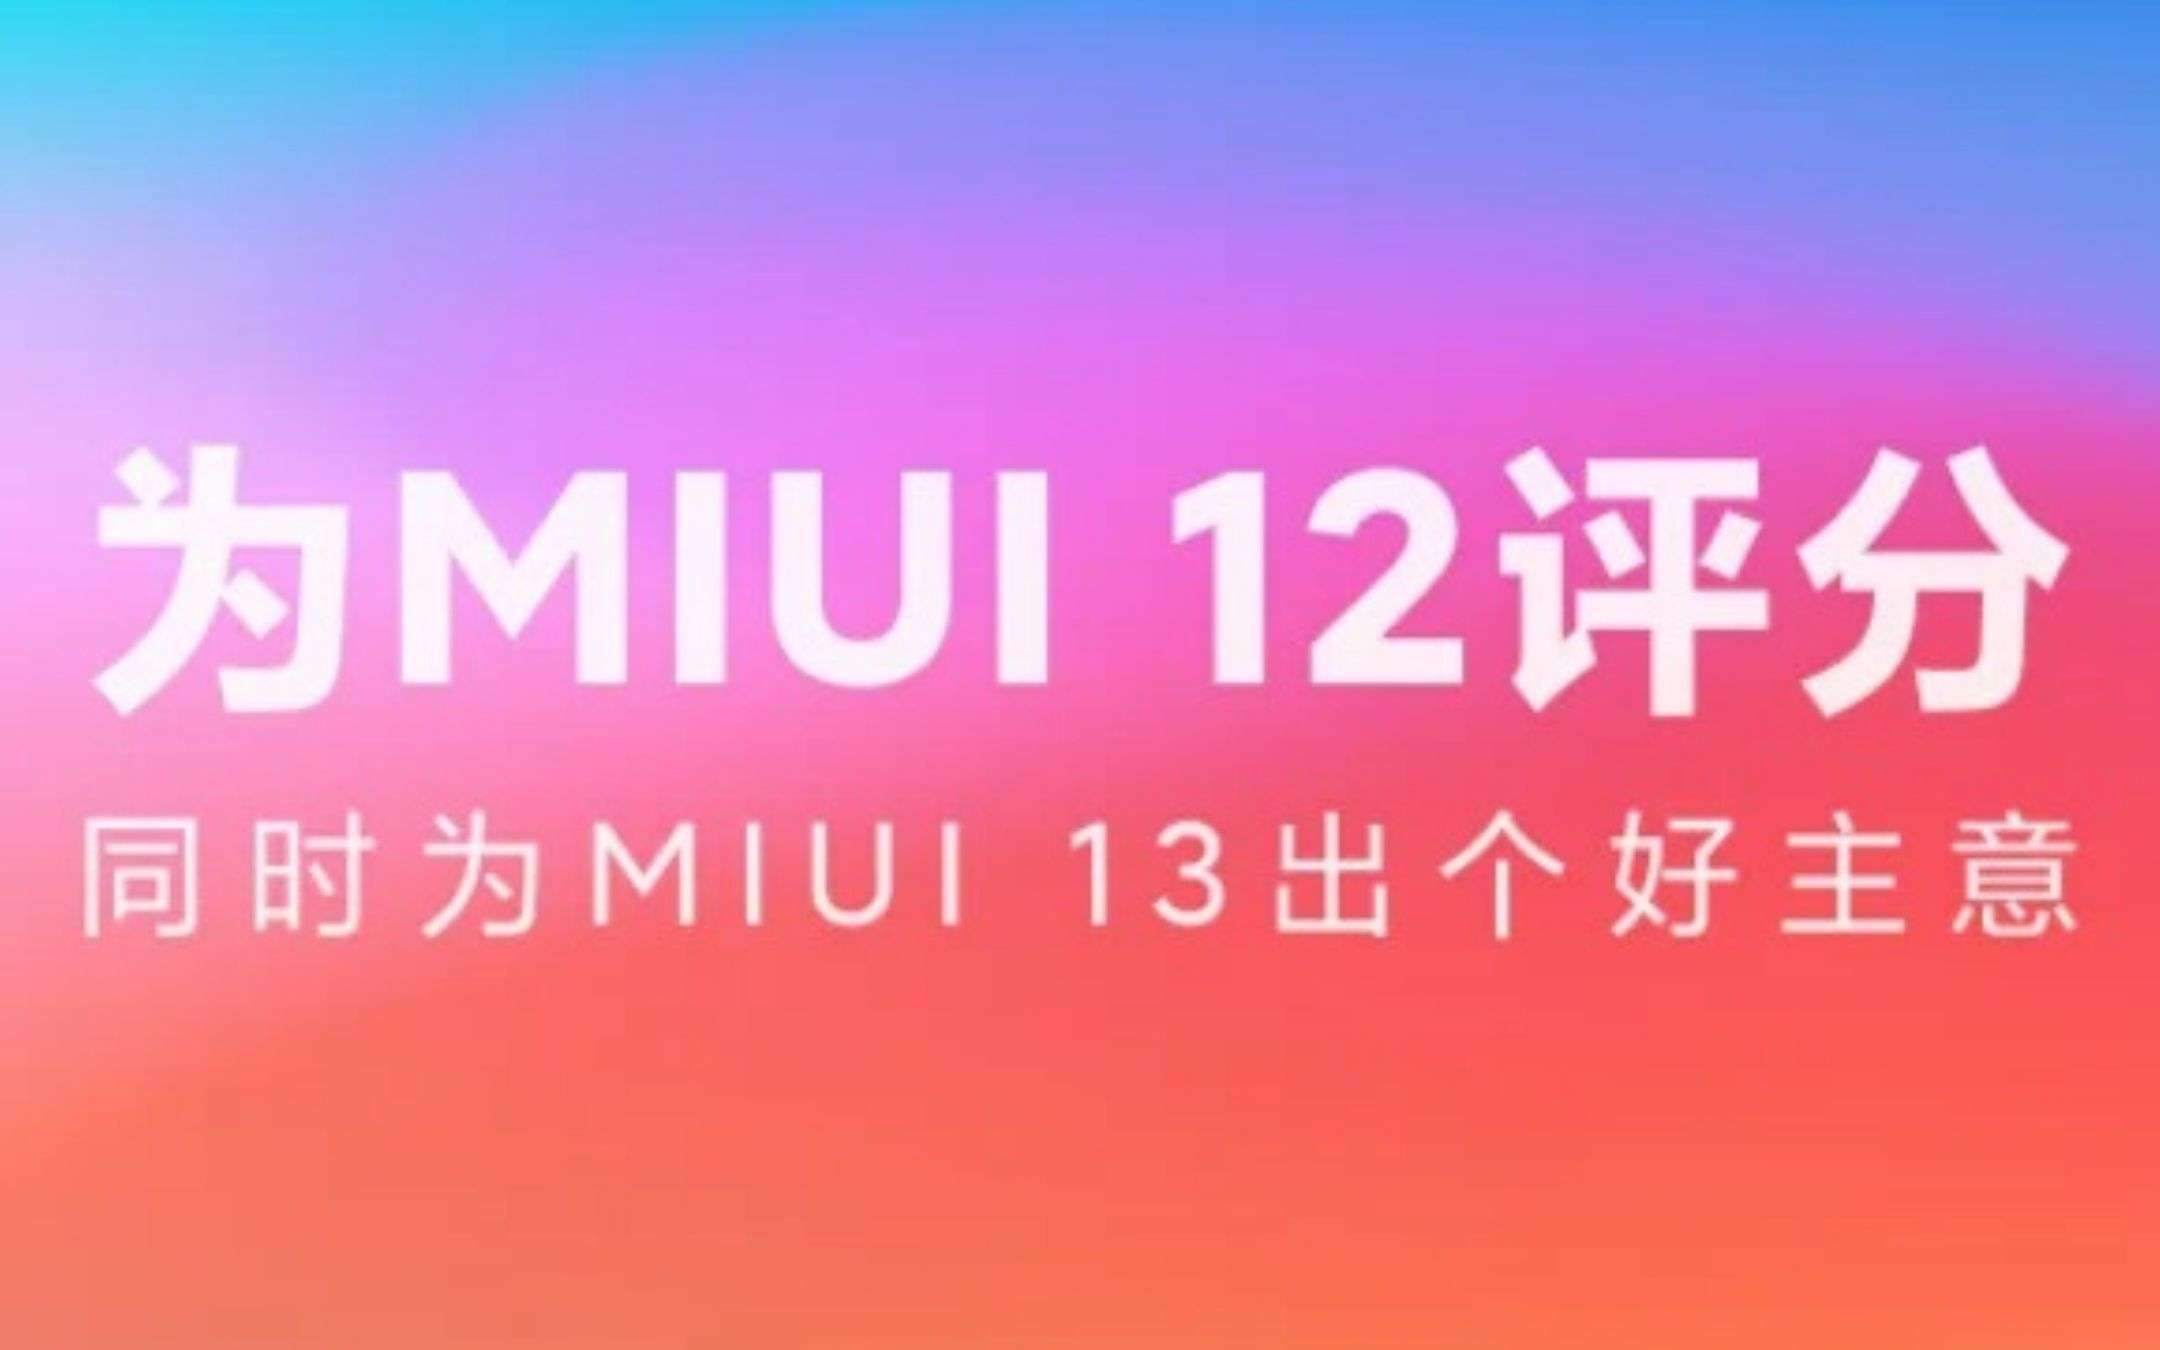 MIUI 13 è in fase di sviluppo: conferma ufficiale